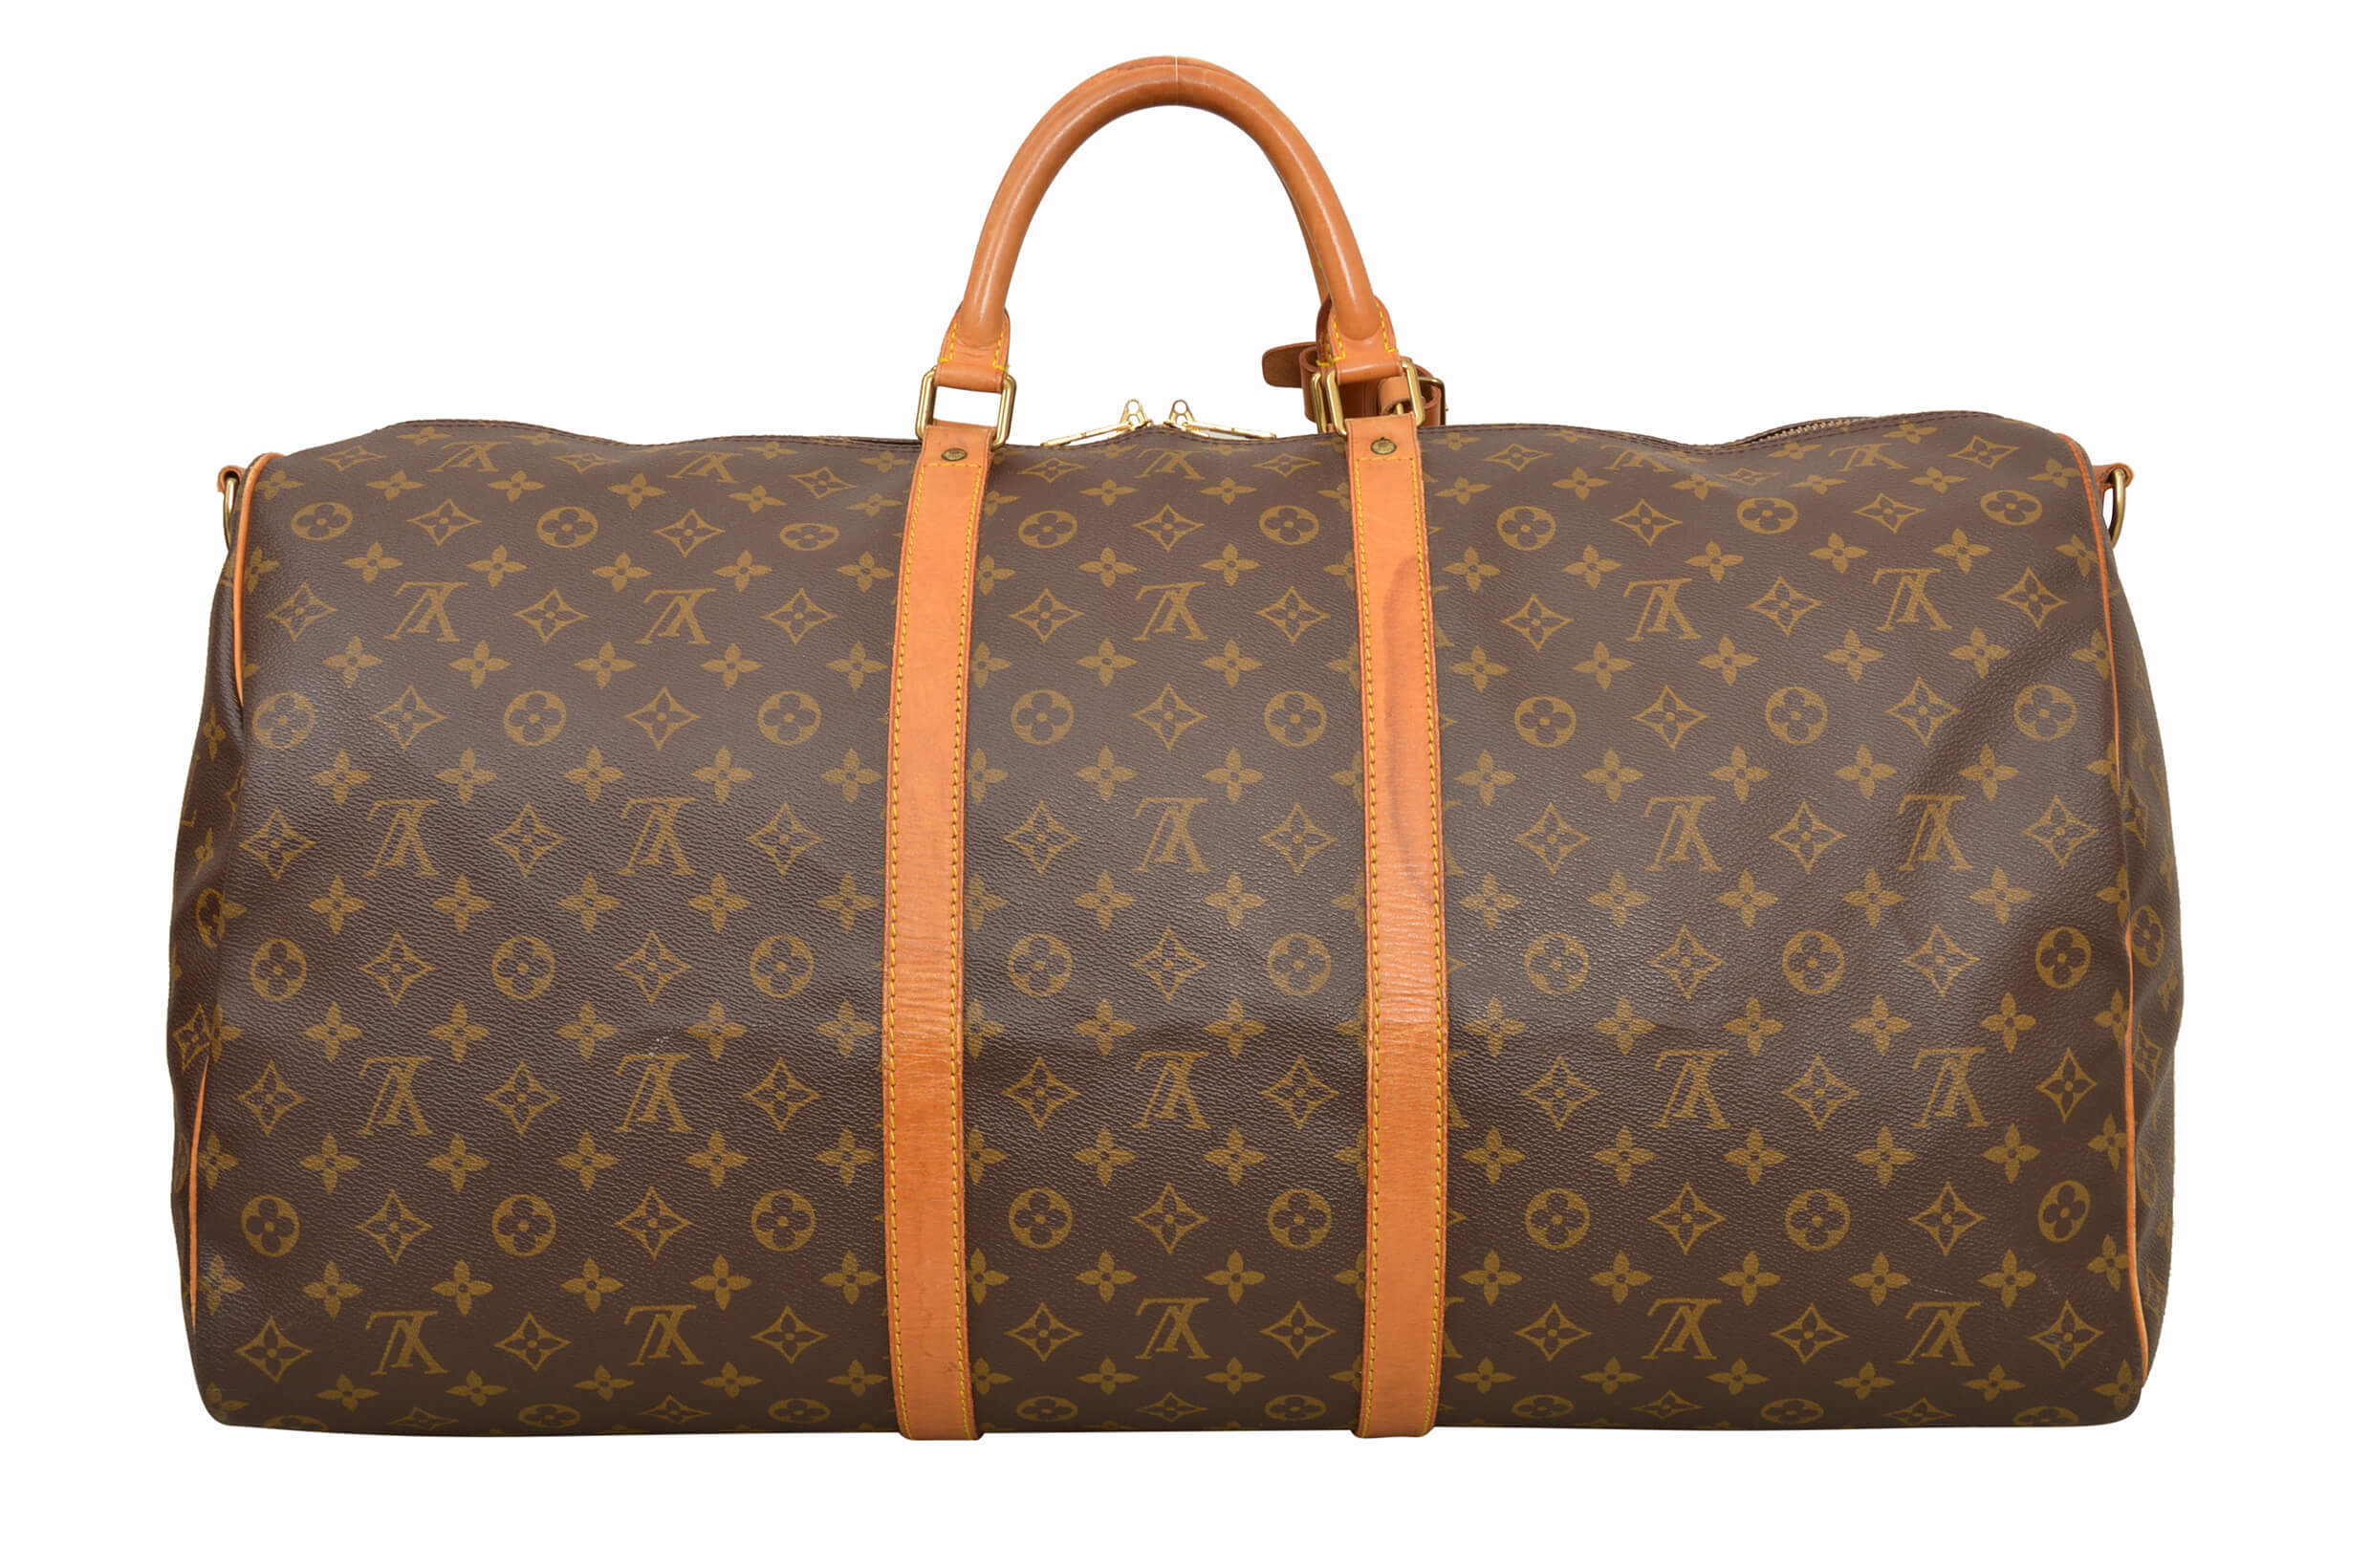 Louis Vuitton Monogram Keepall 60 Bandouliere Travel Bag M41412 - D02333 | eBay